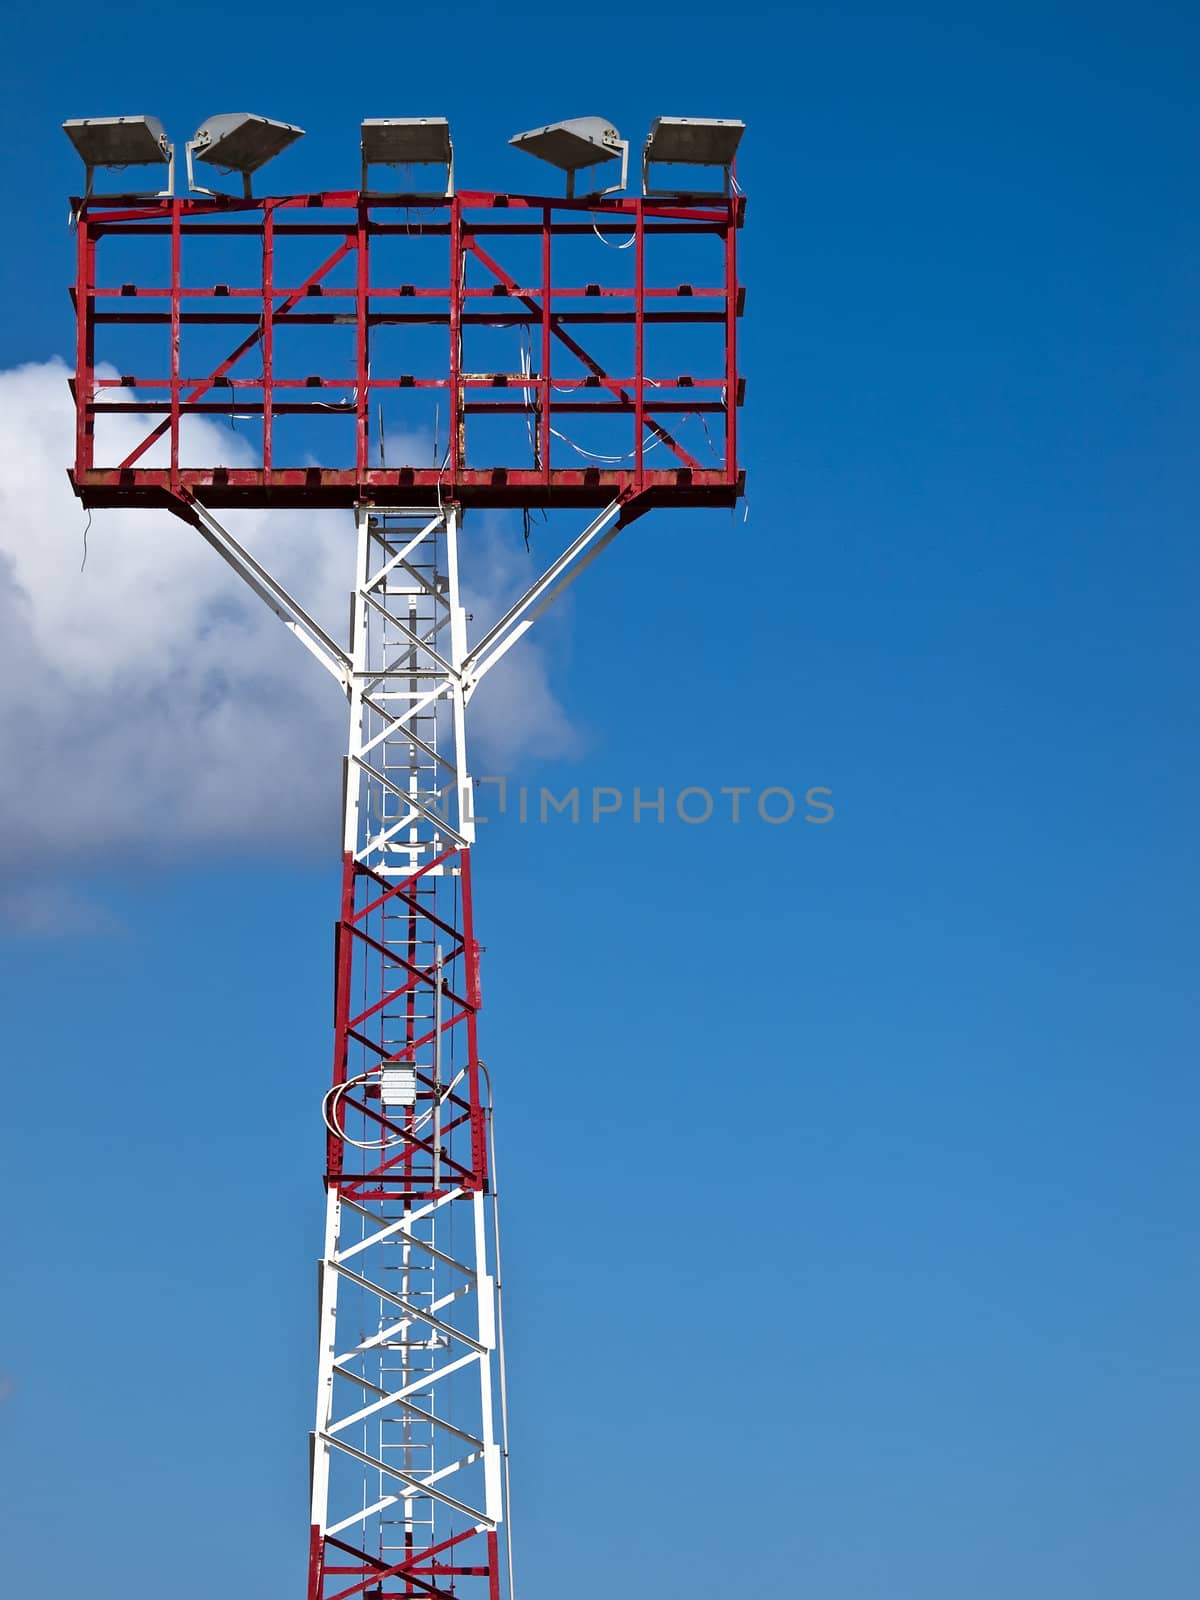 Airfield Lighting Pylon by PhotoWorks